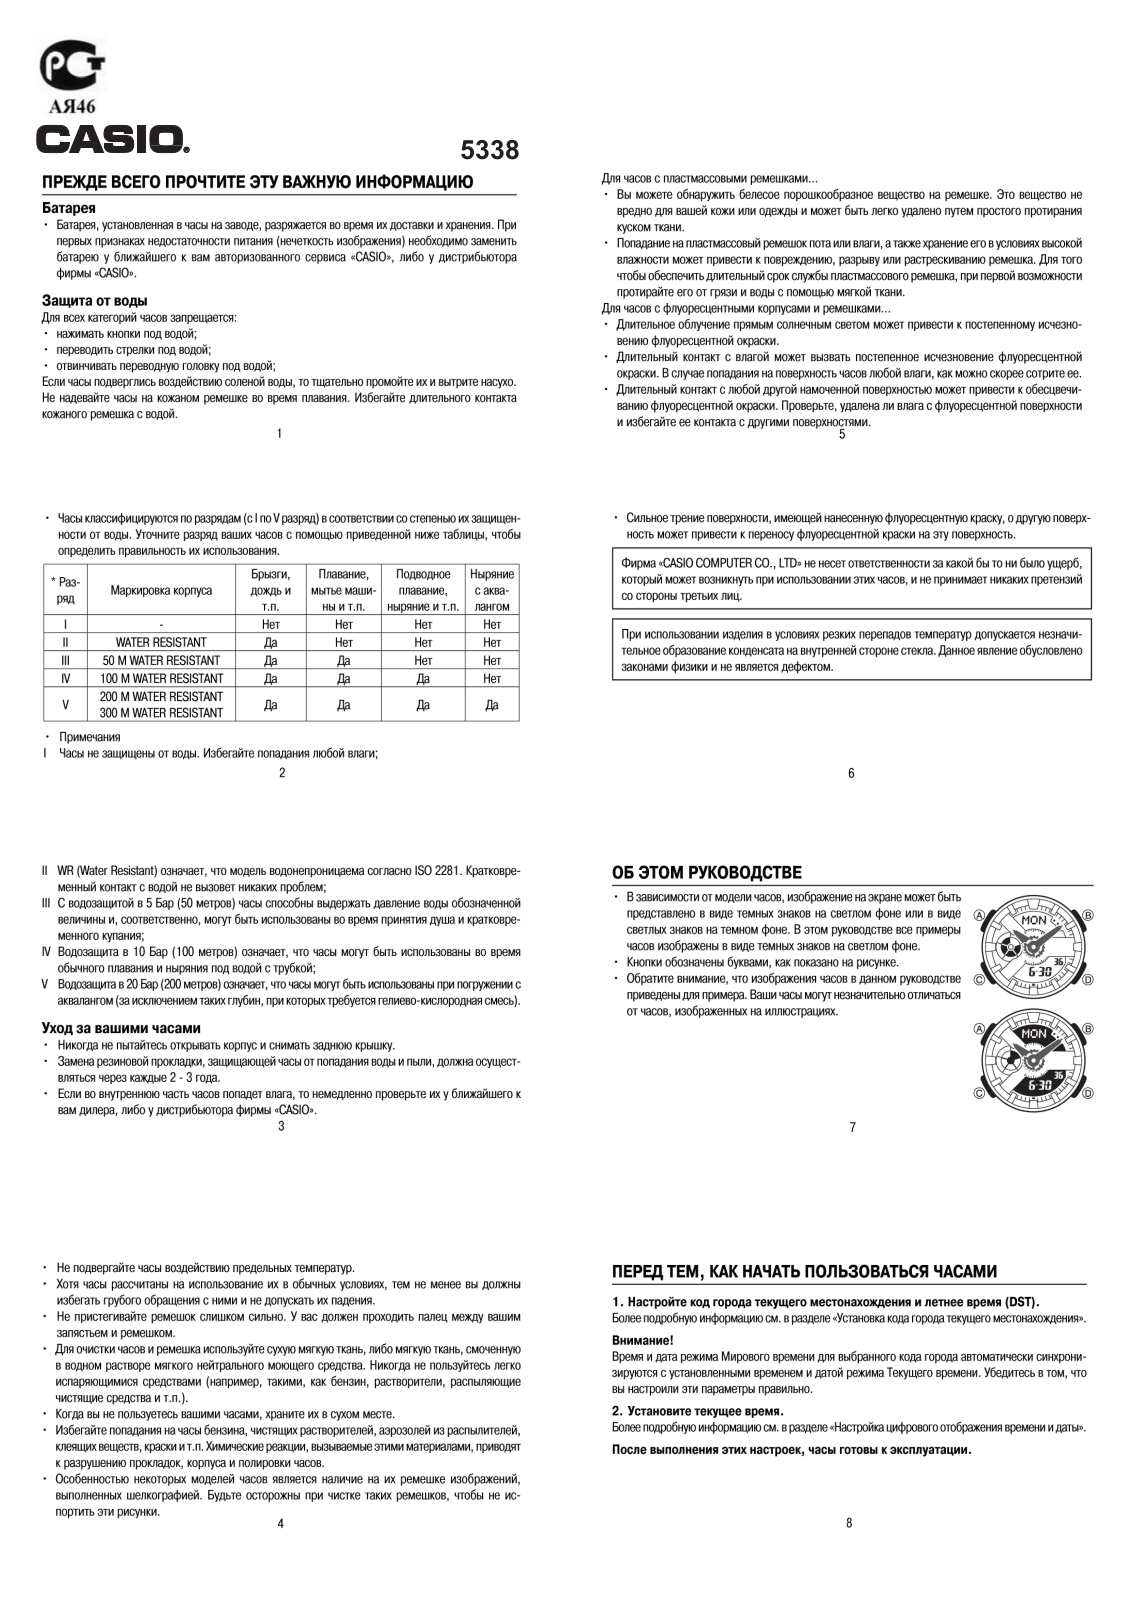 Casio BA-110SN-3A User Manual